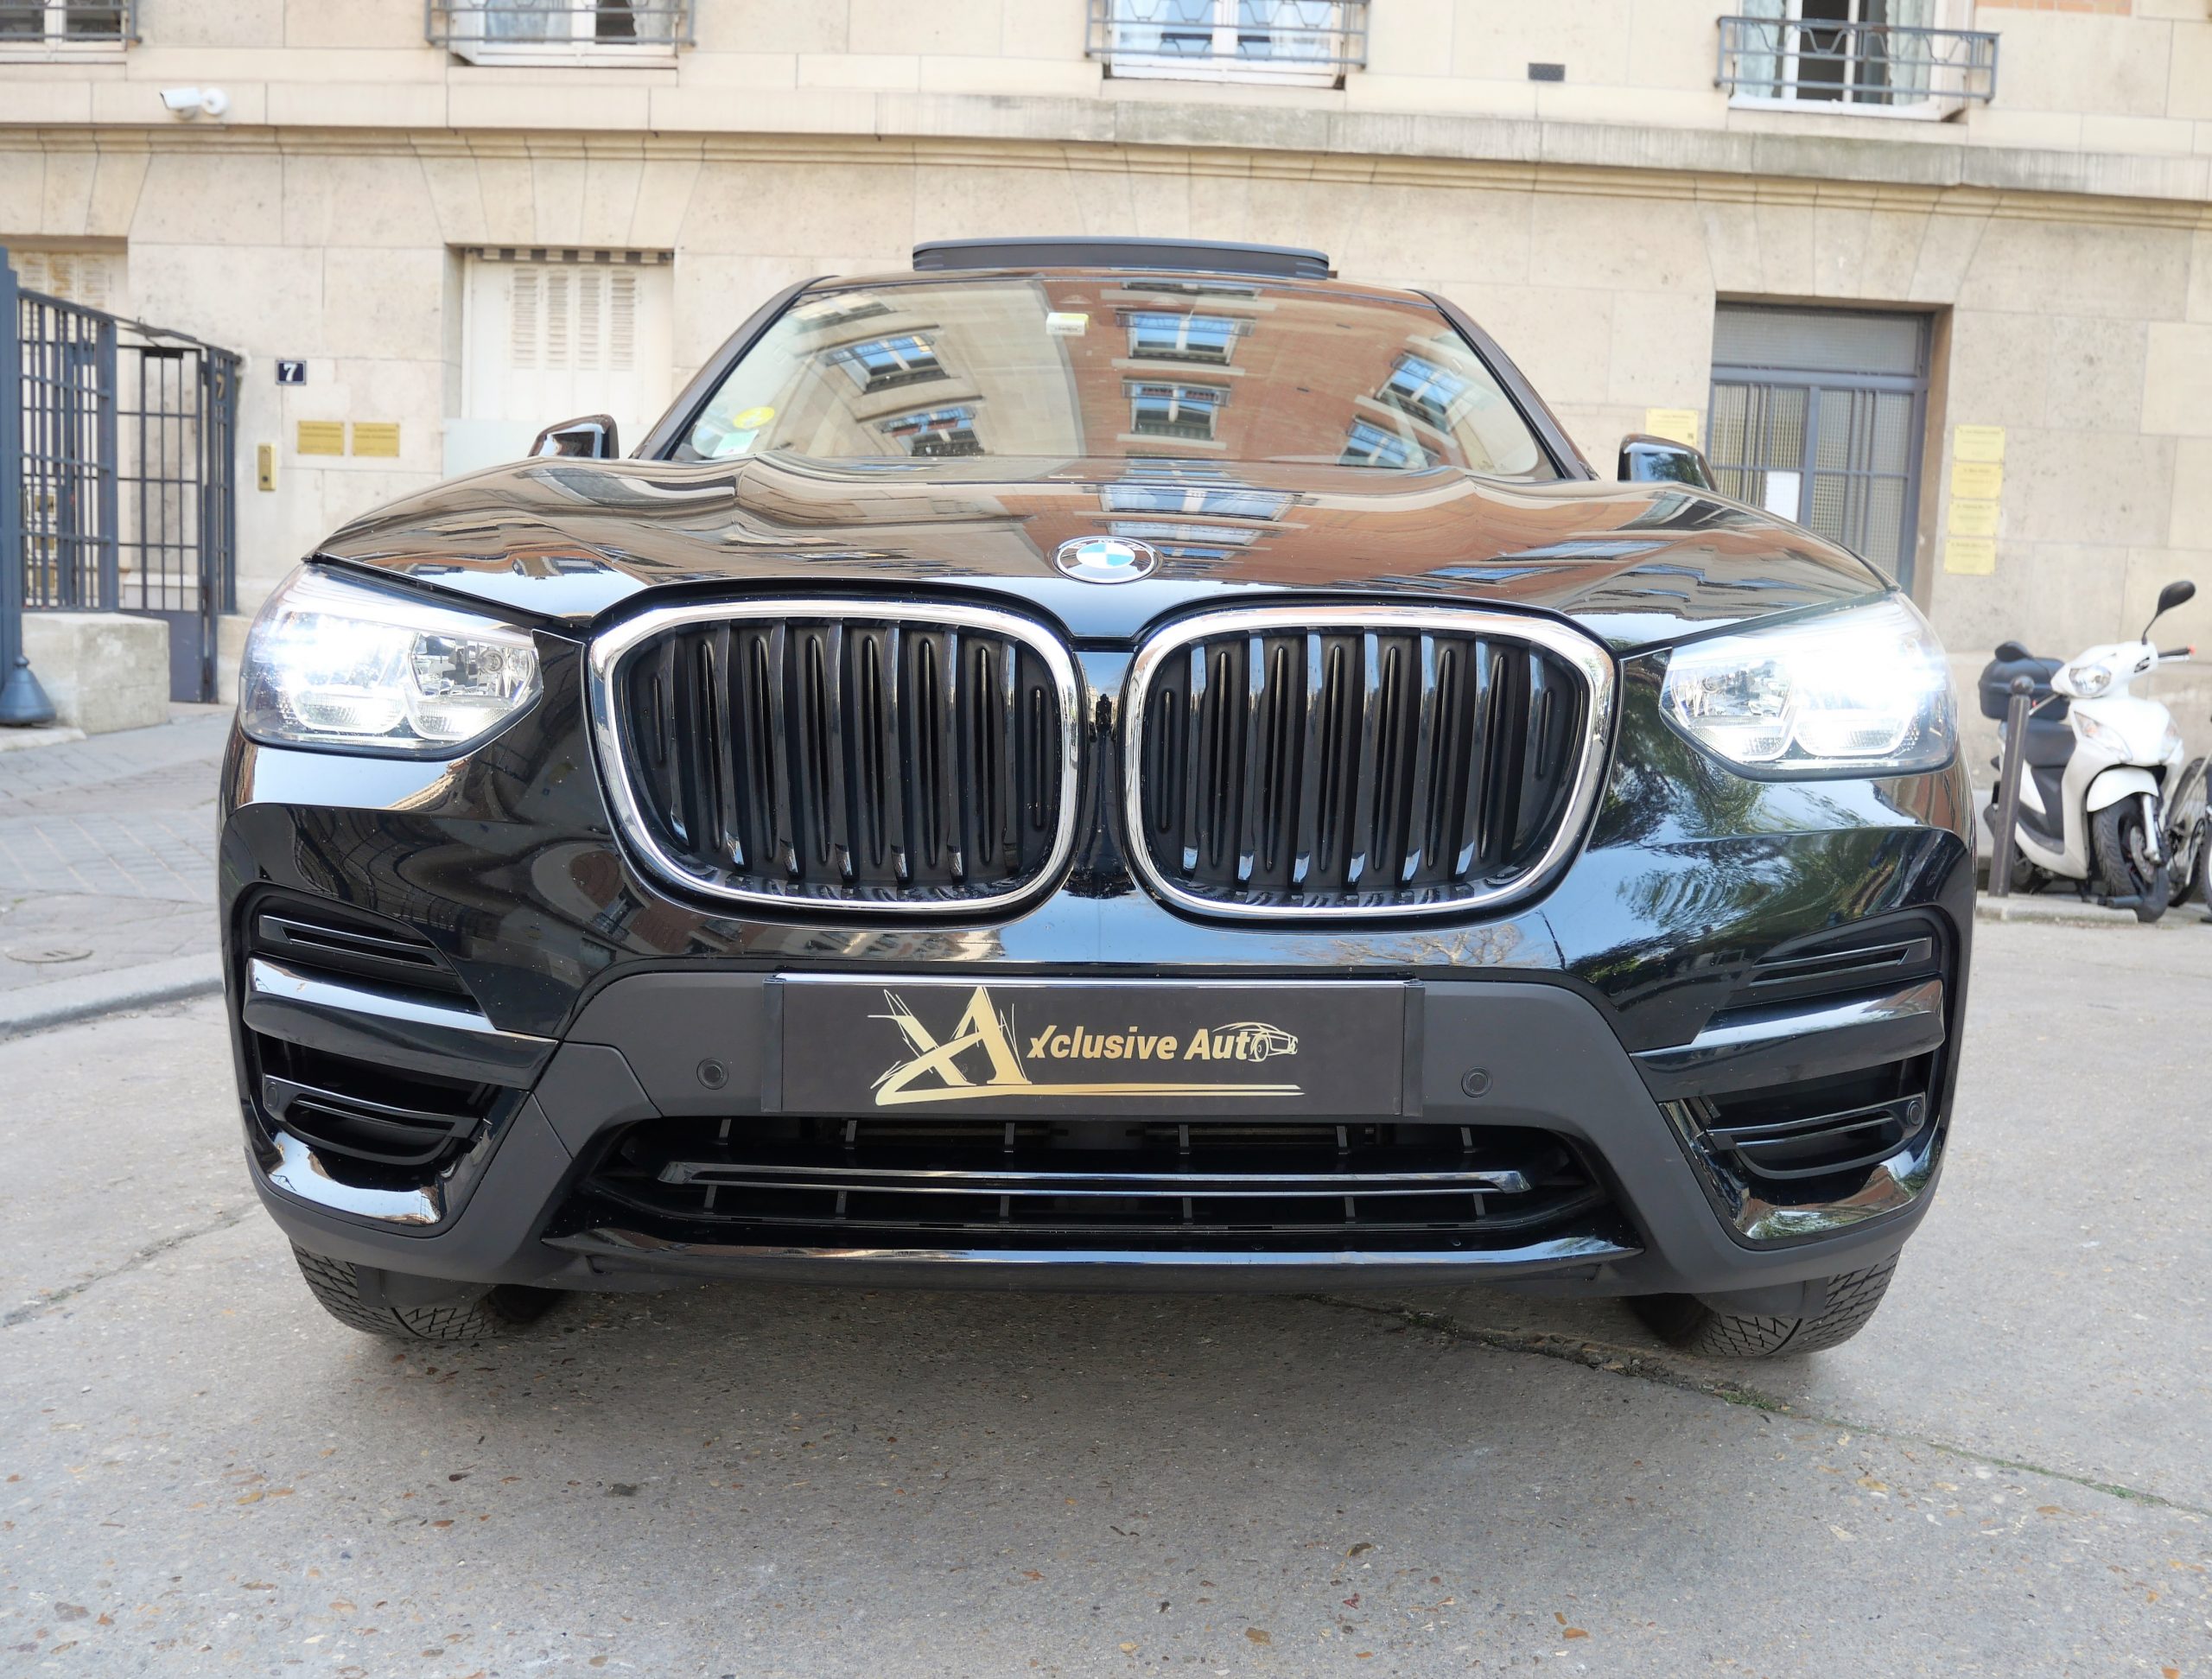 BMW X3 Xline (G01) 20d xDrive 2.0 d Steptronic8 190 ch 7